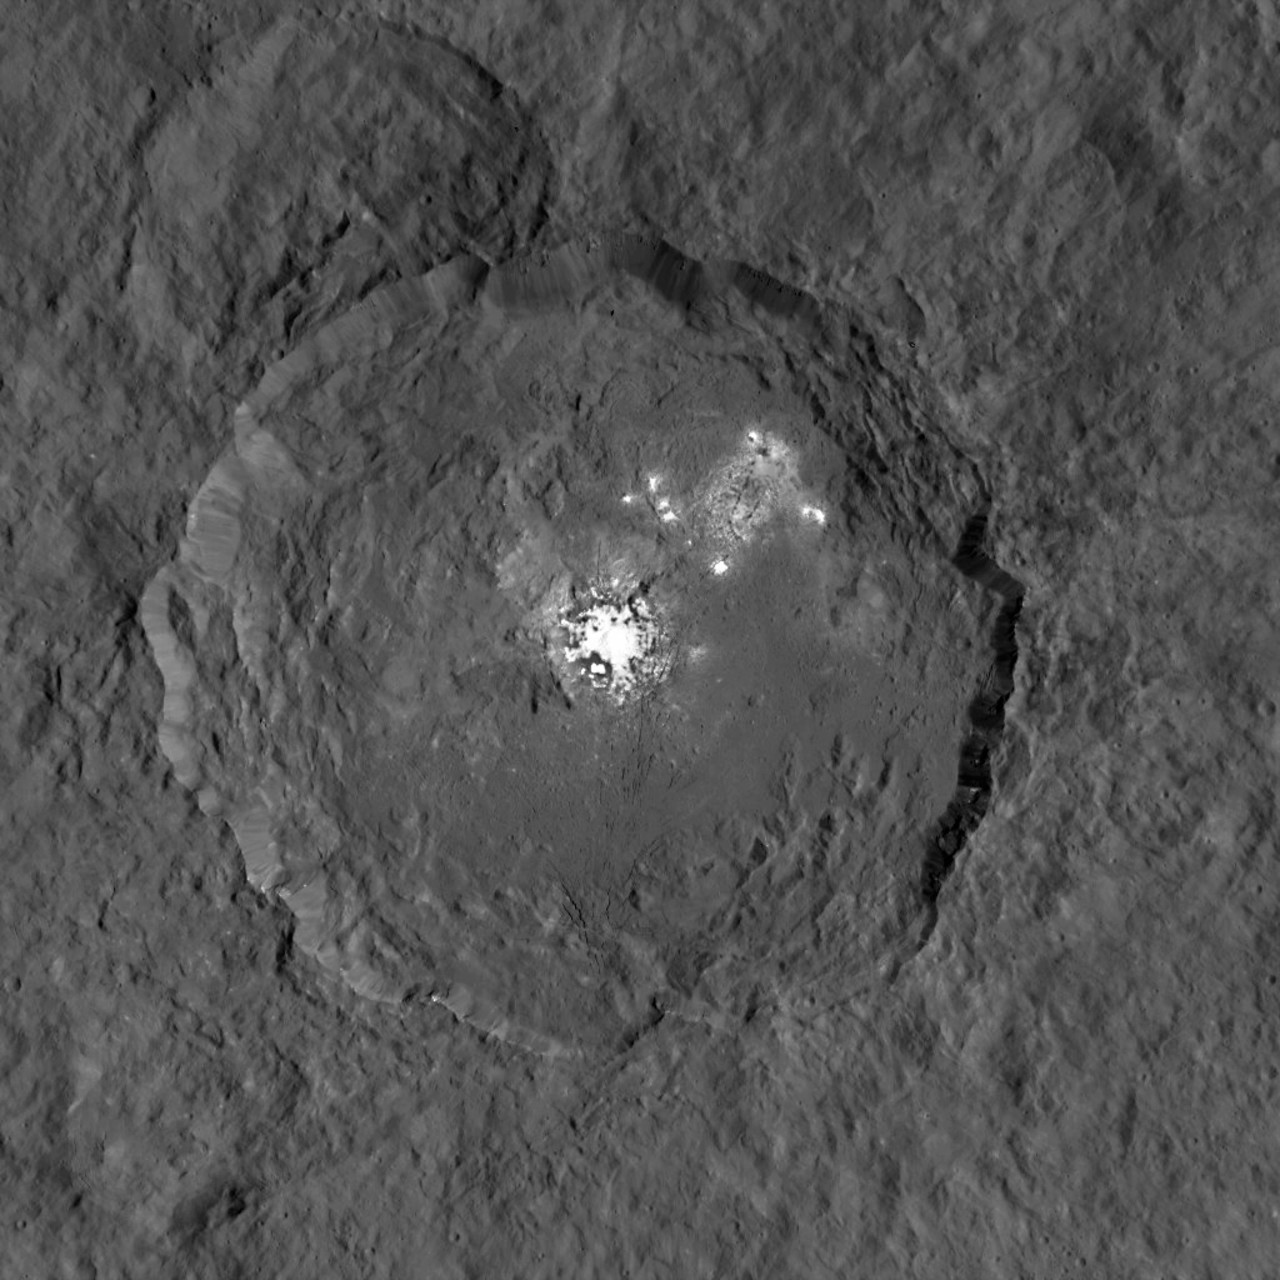 Ceres Occator Crater Bright Spot